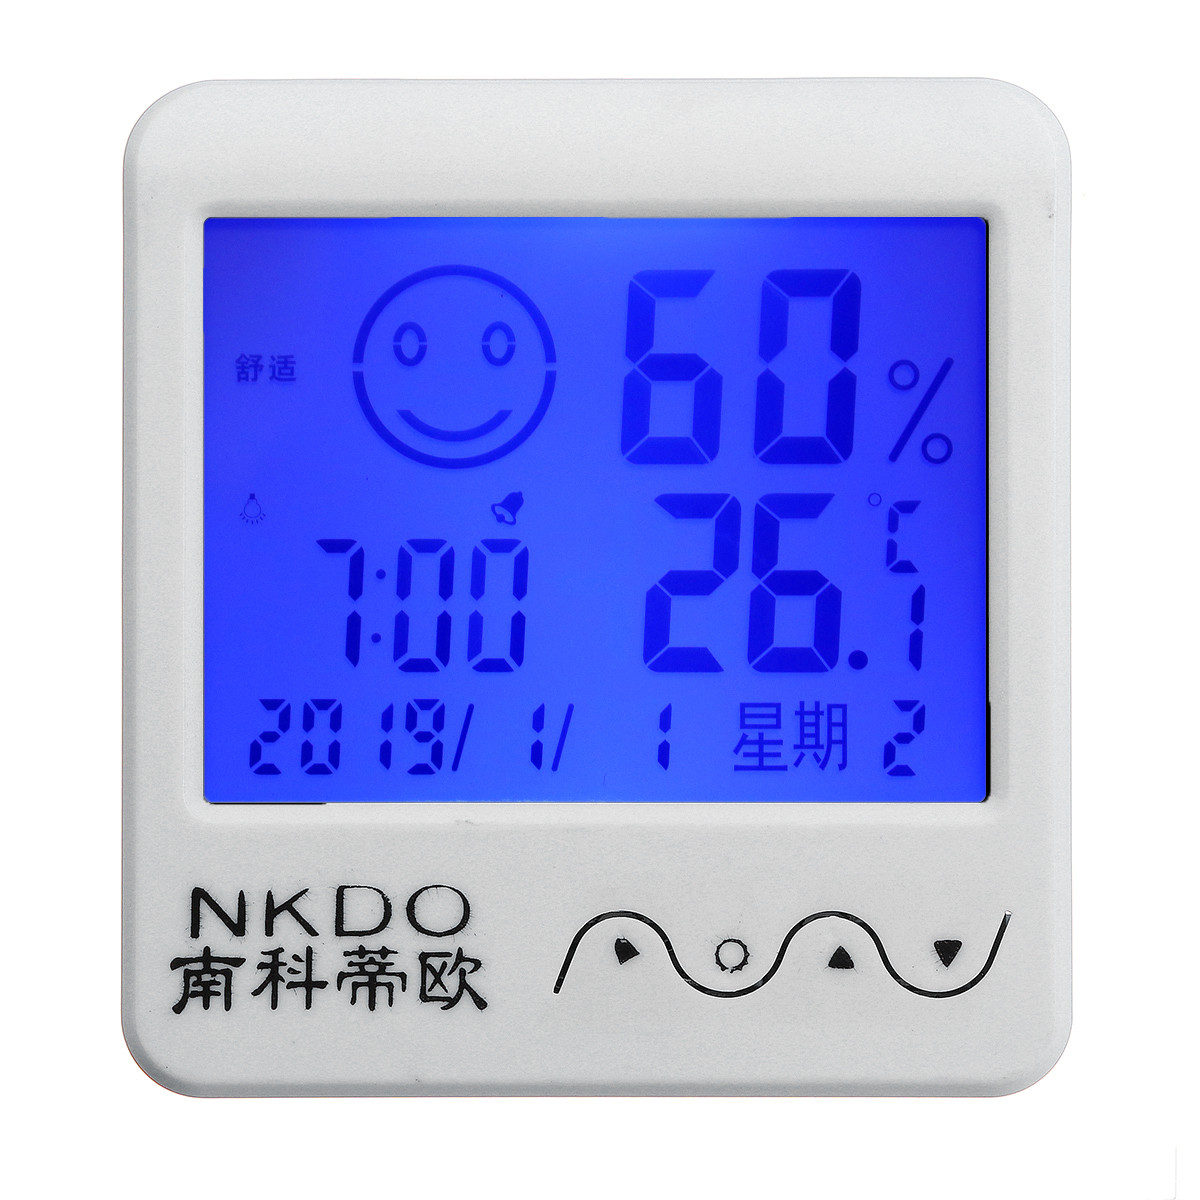 Digital-Desktop-Thermo-hygrometer-Alarm-Clock-LCD-Screen-Temperature-Humidity-1657225-4